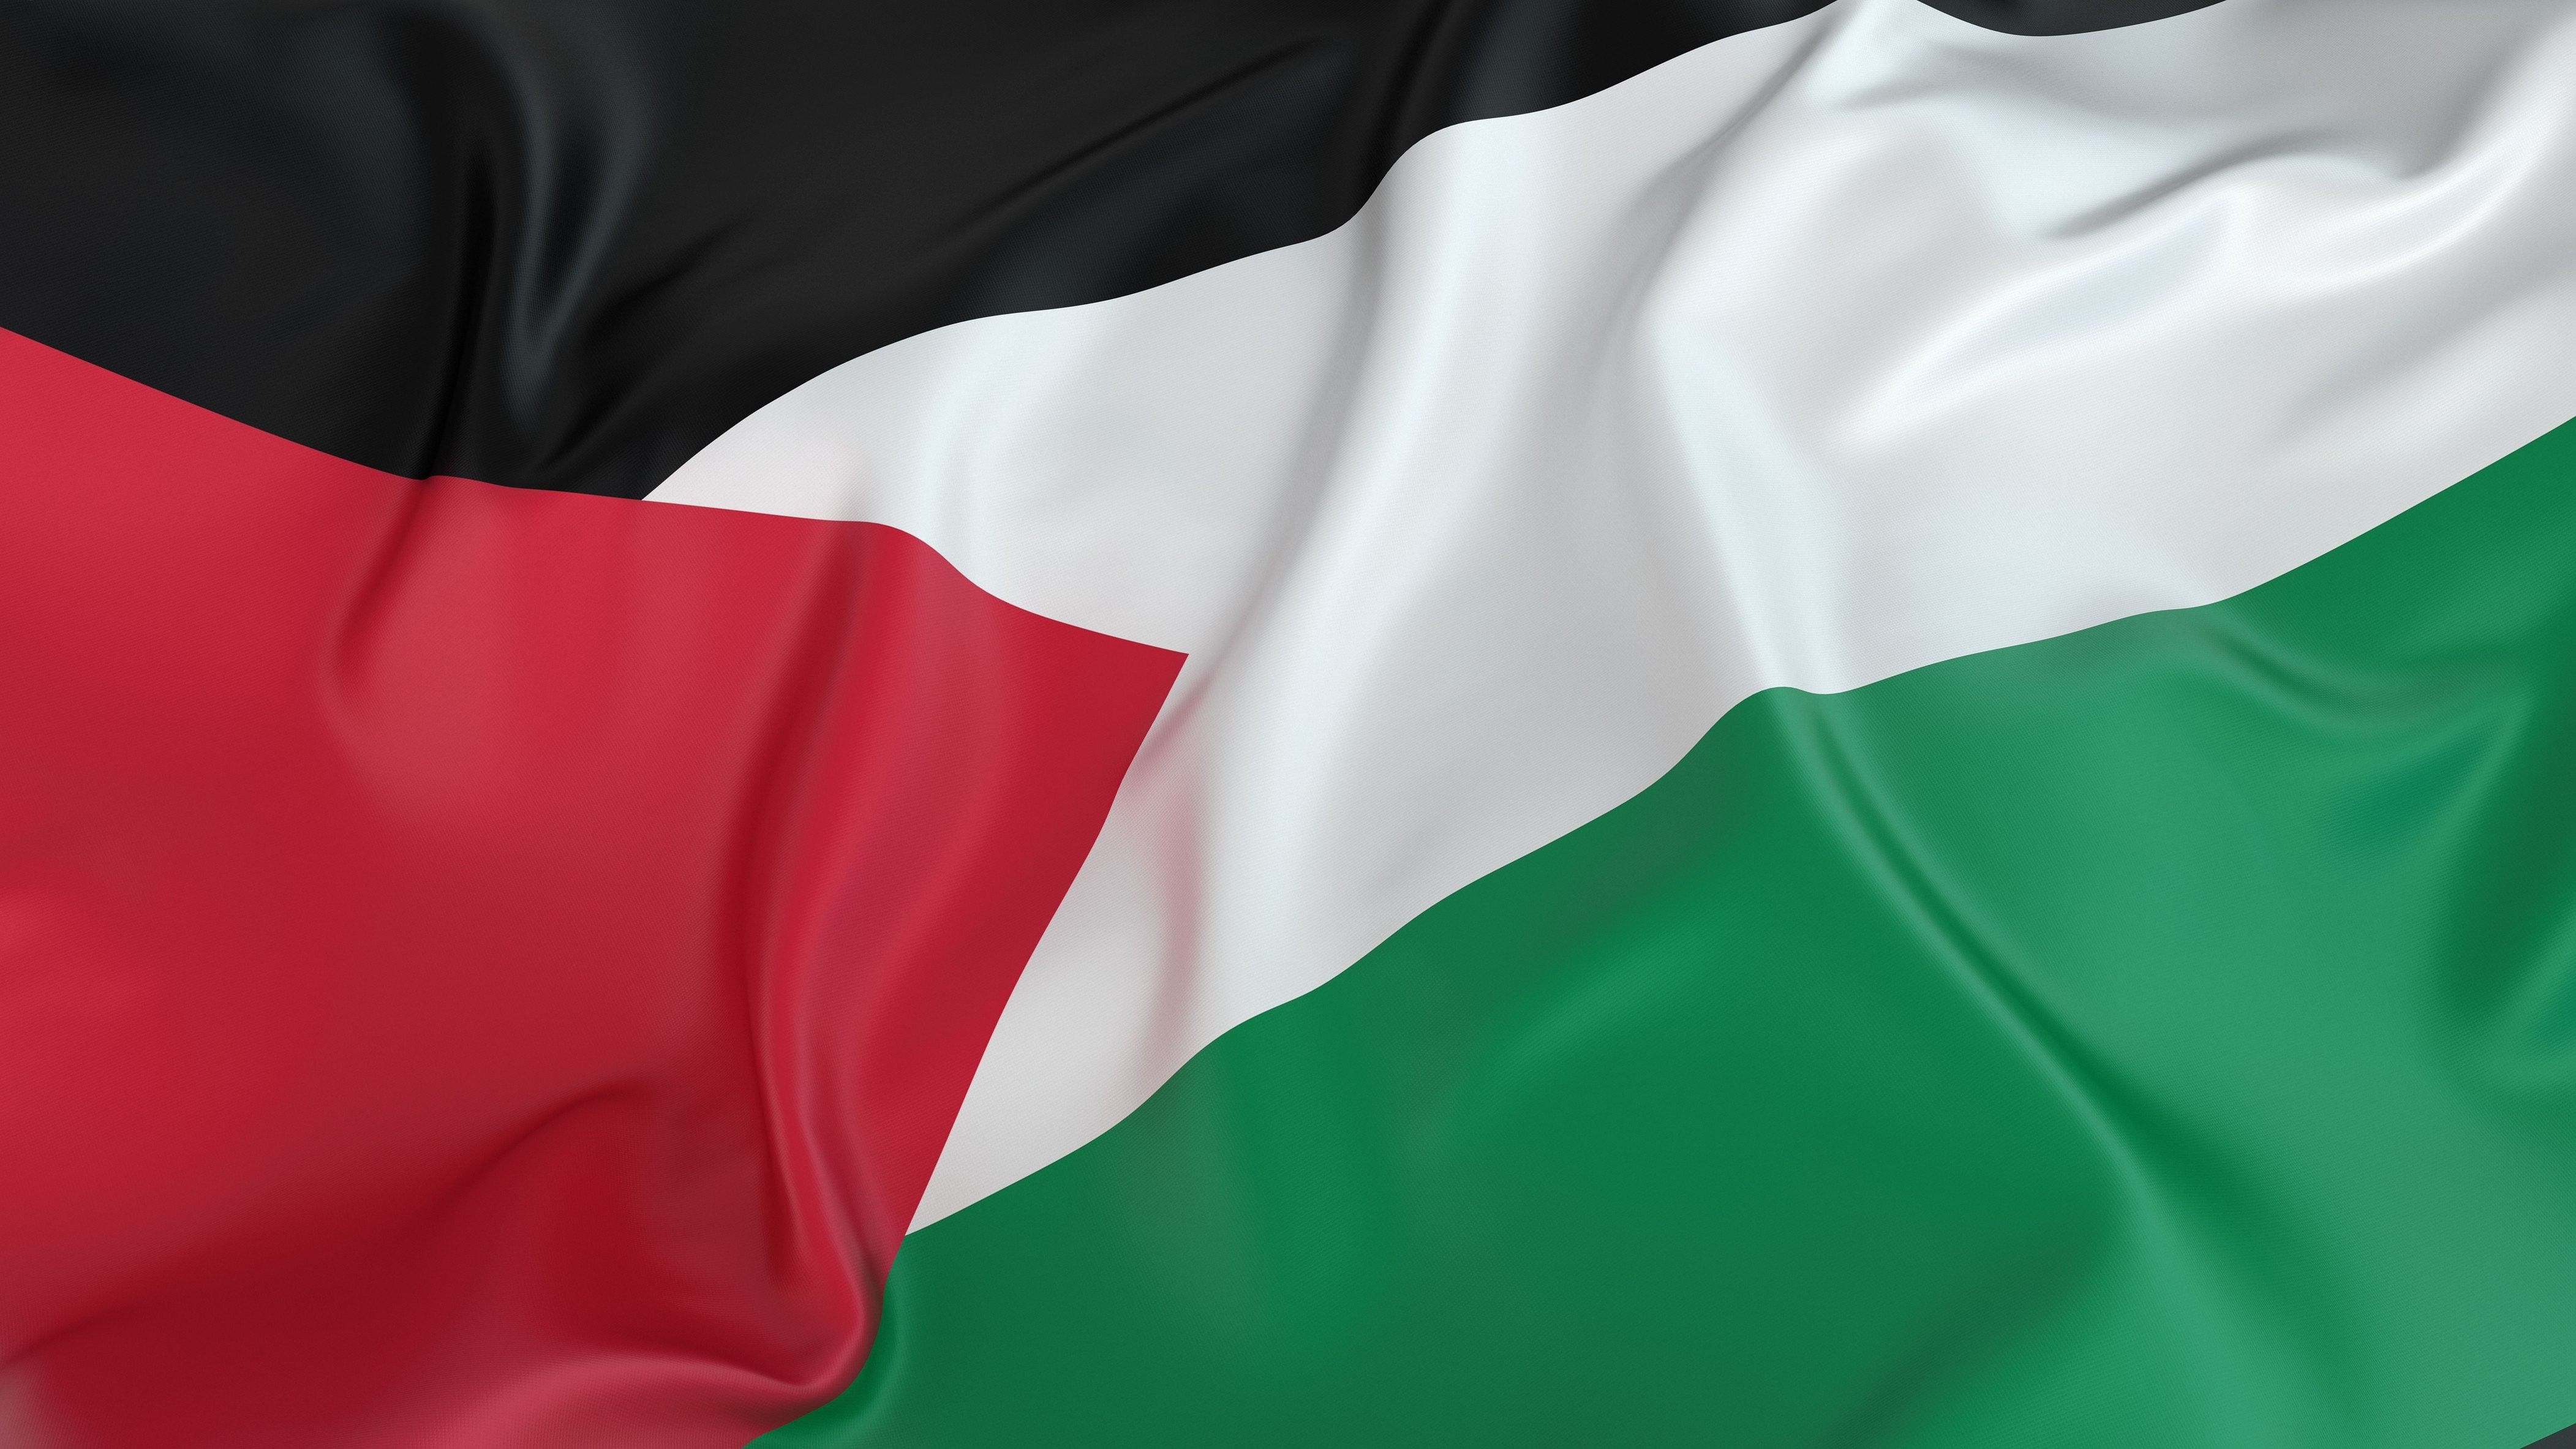 <div class="paragraphs"><p>Representative image showing Palestine flag</p></div>